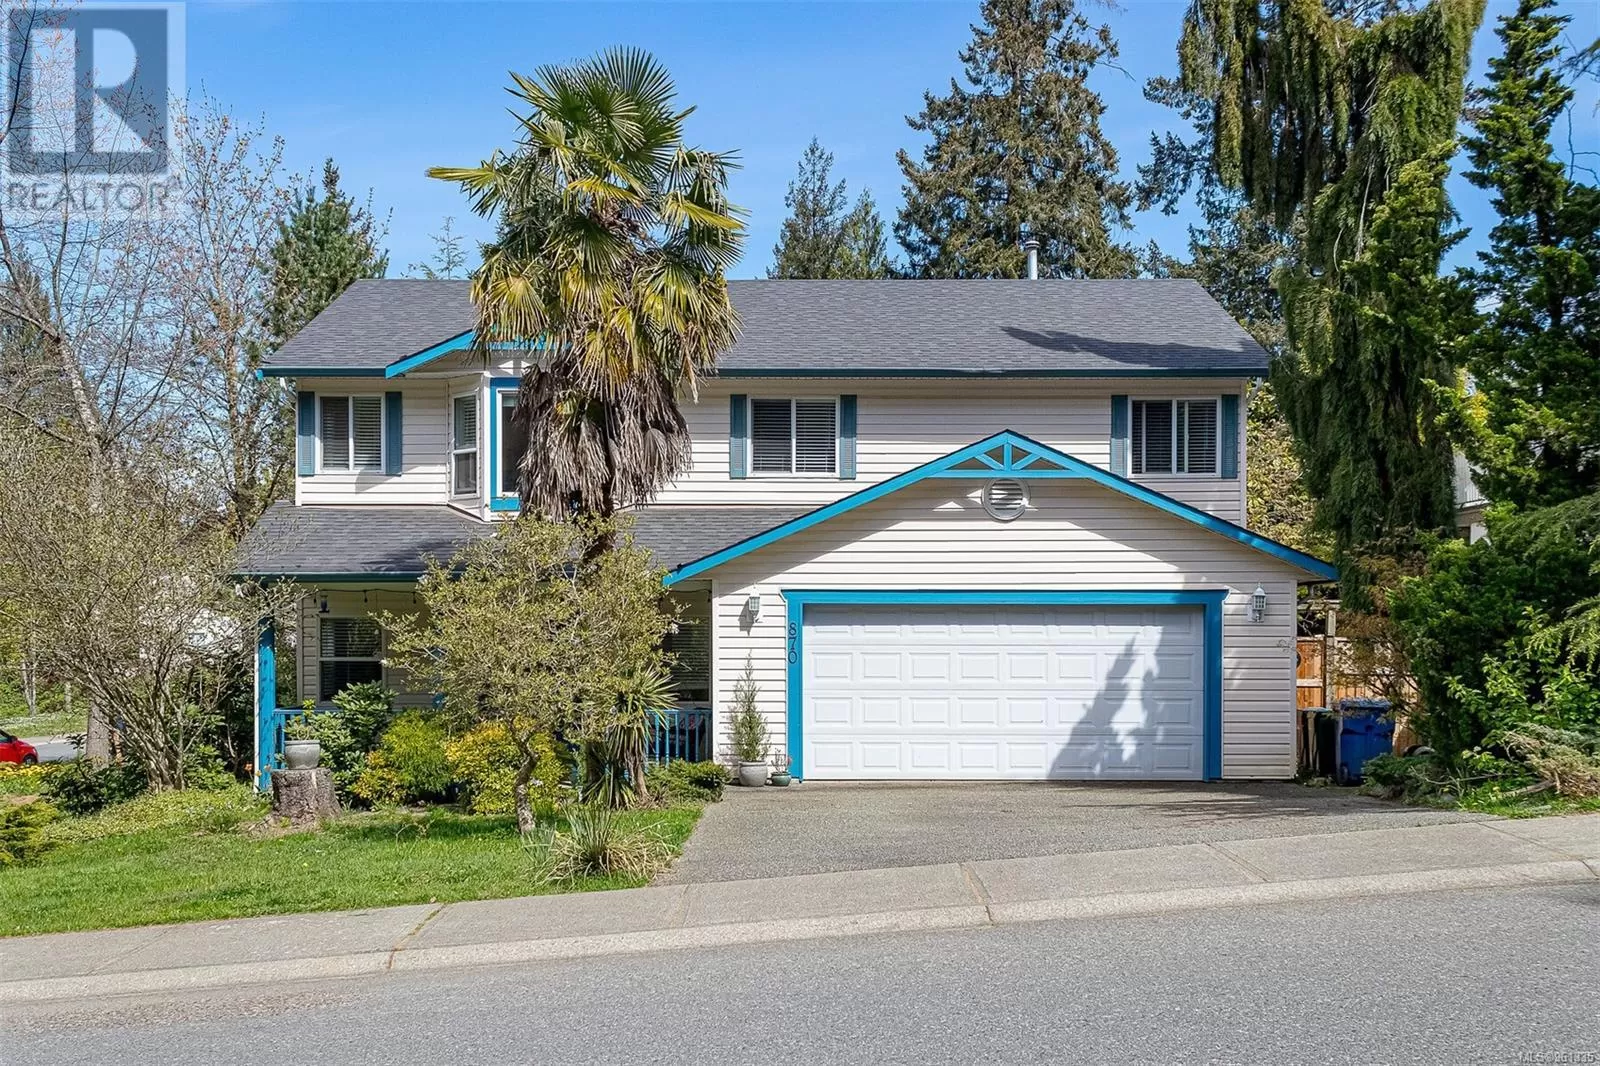 House for rent: 870 Kentwood Way, Nanaimo, British Columbia V9R 6P1